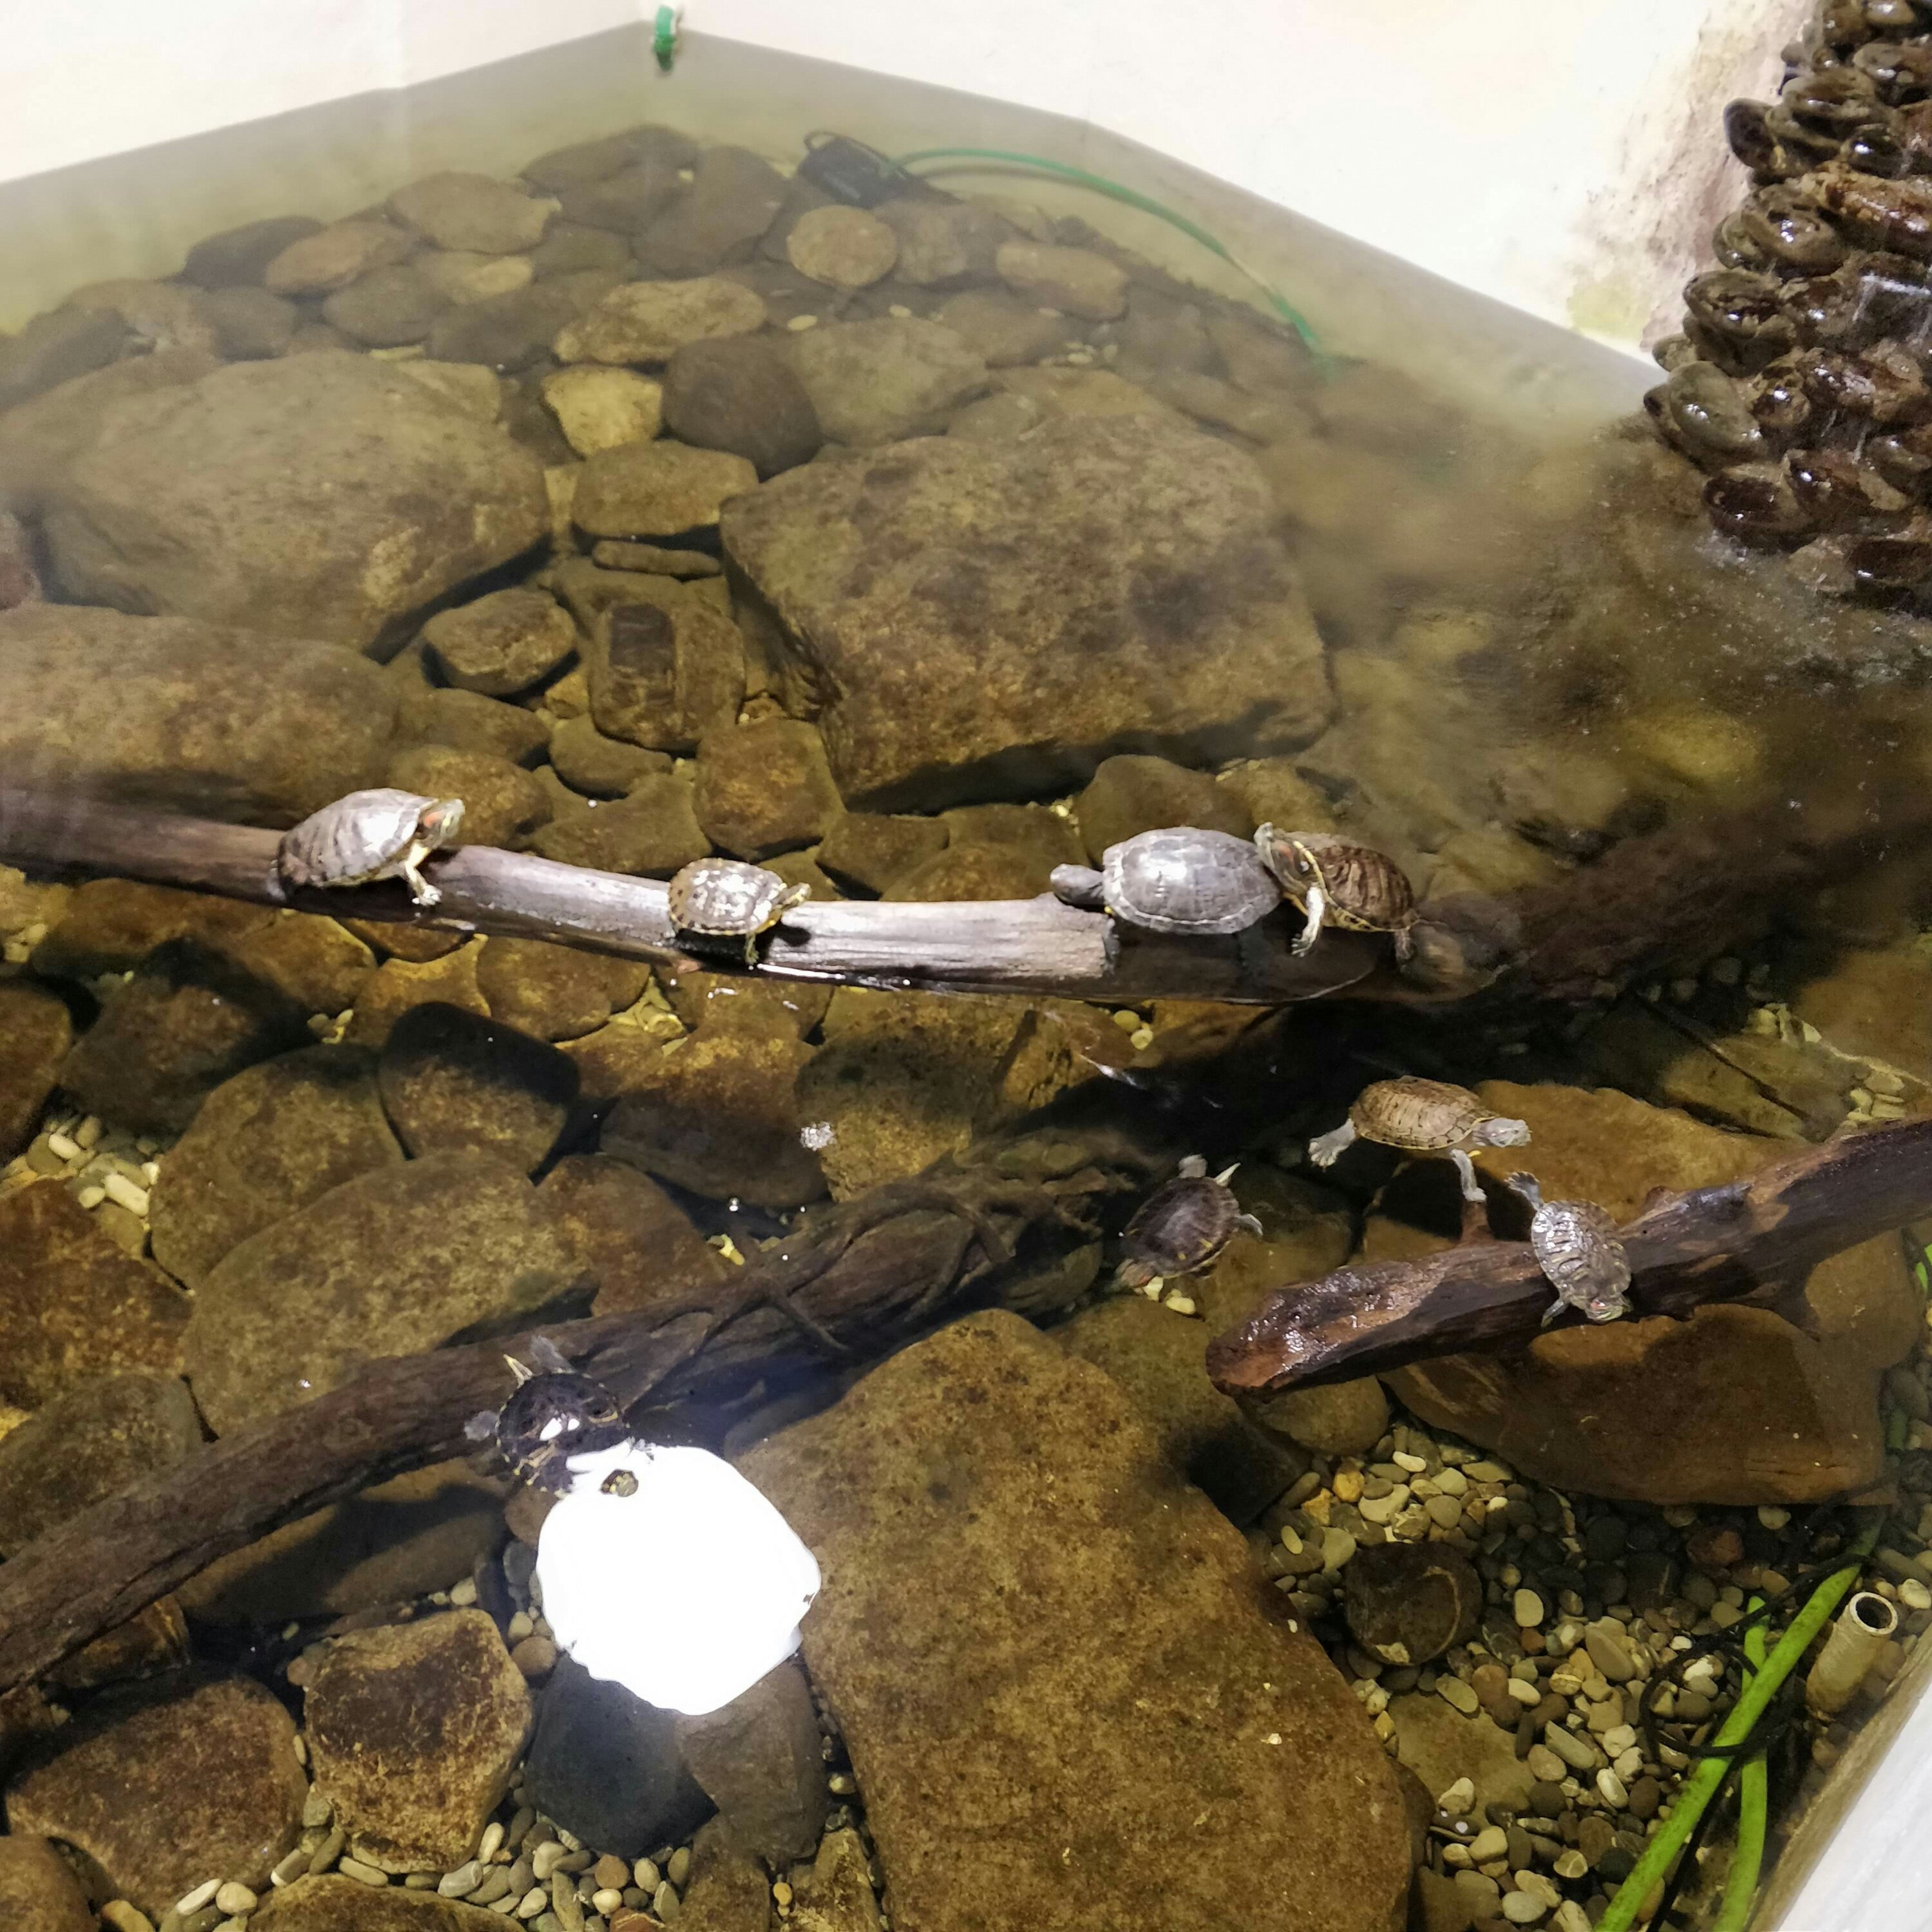 photo of sweet water turtles in an aquarium tank